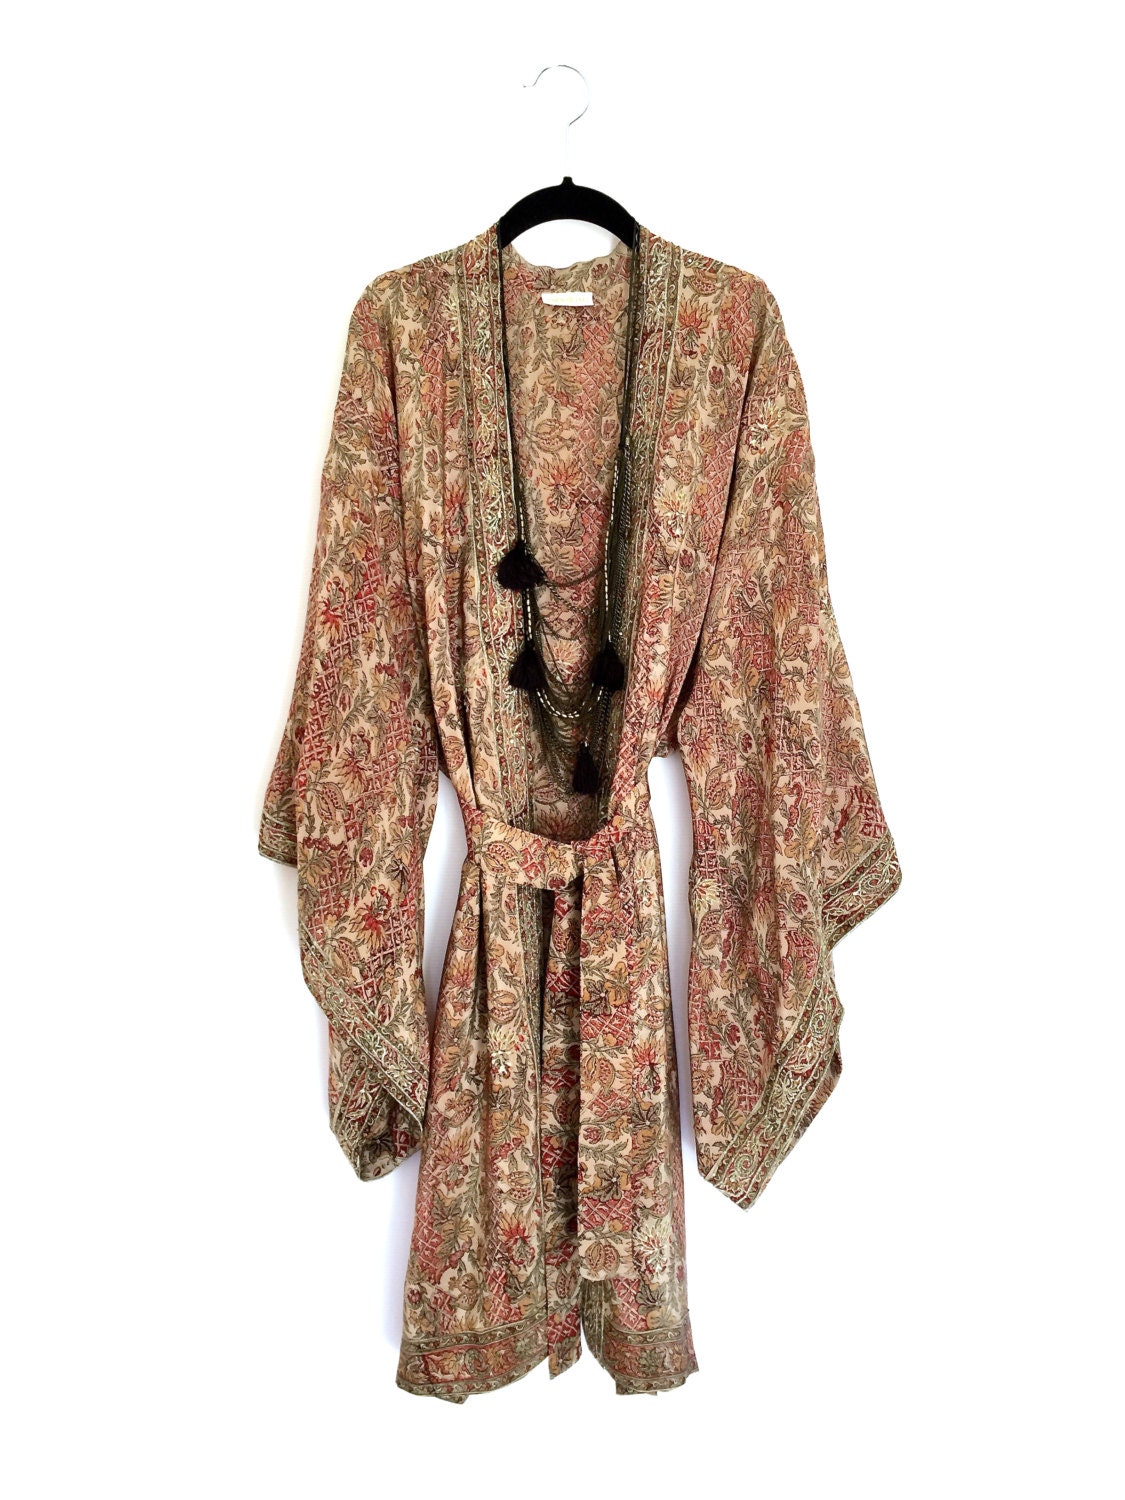 Silk Kimono jacket oversized wide sleeve style in beige and